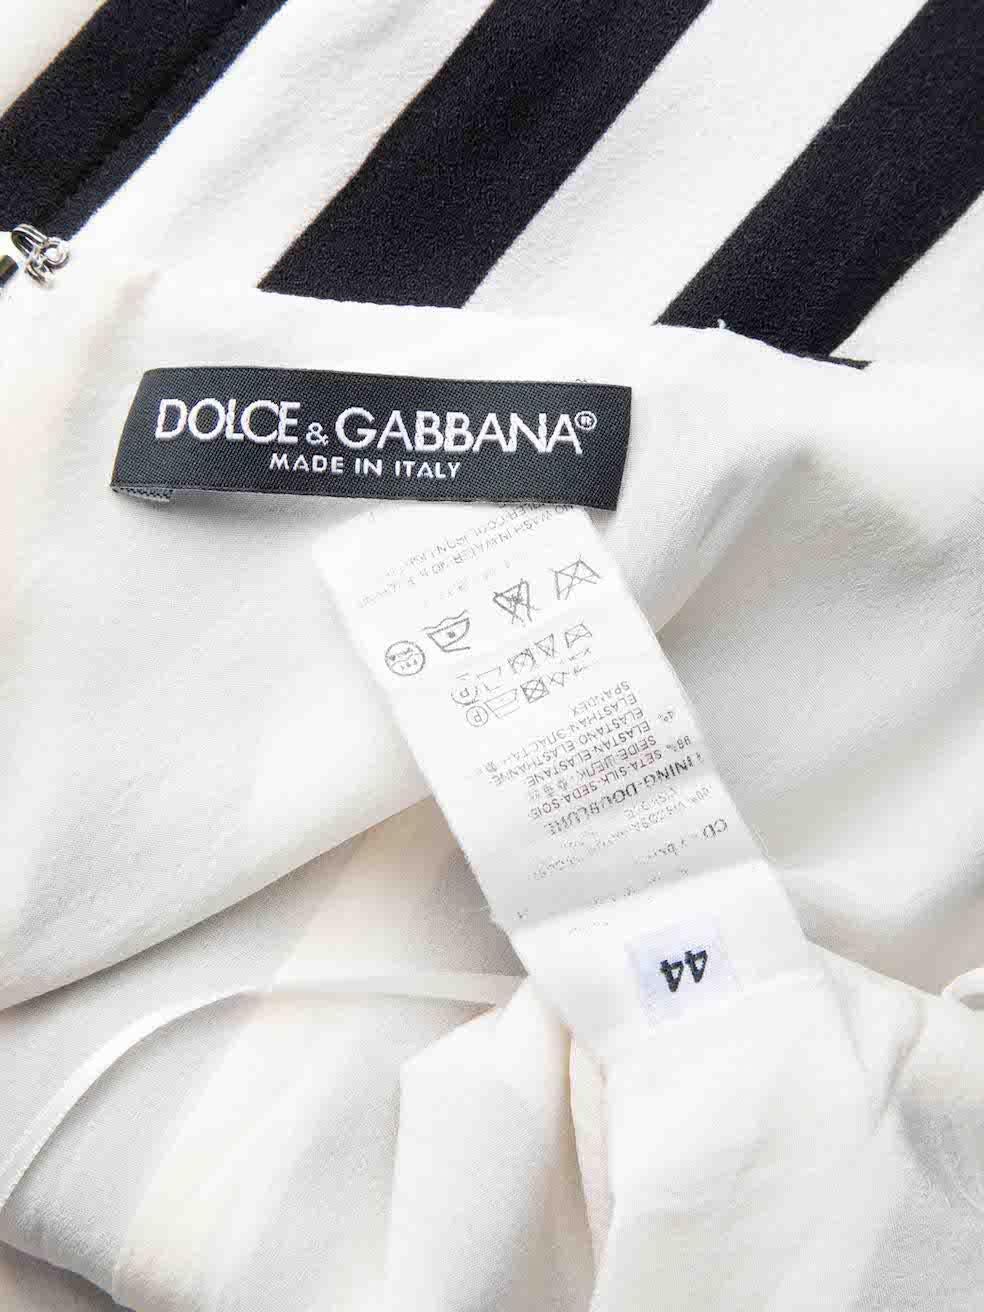 Dolce & Gabbana Black & White Striped Dress Size L For Sale 4